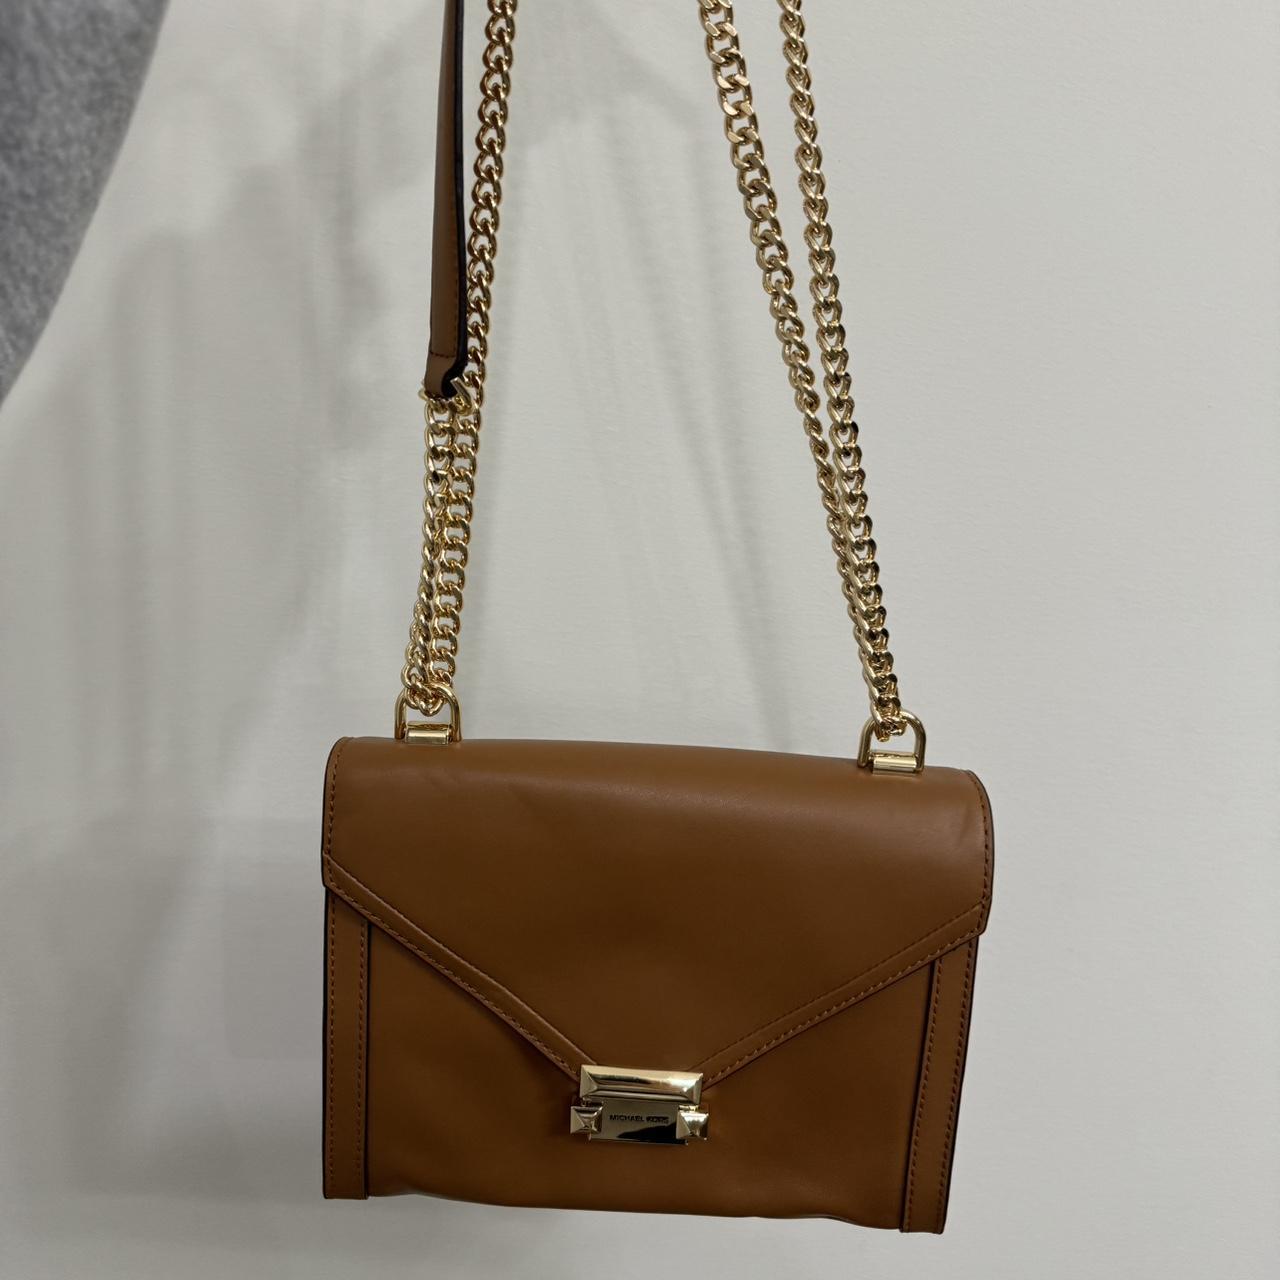 Vintage Authentic Mars M&M Fully Beaded Handbag • - Depop